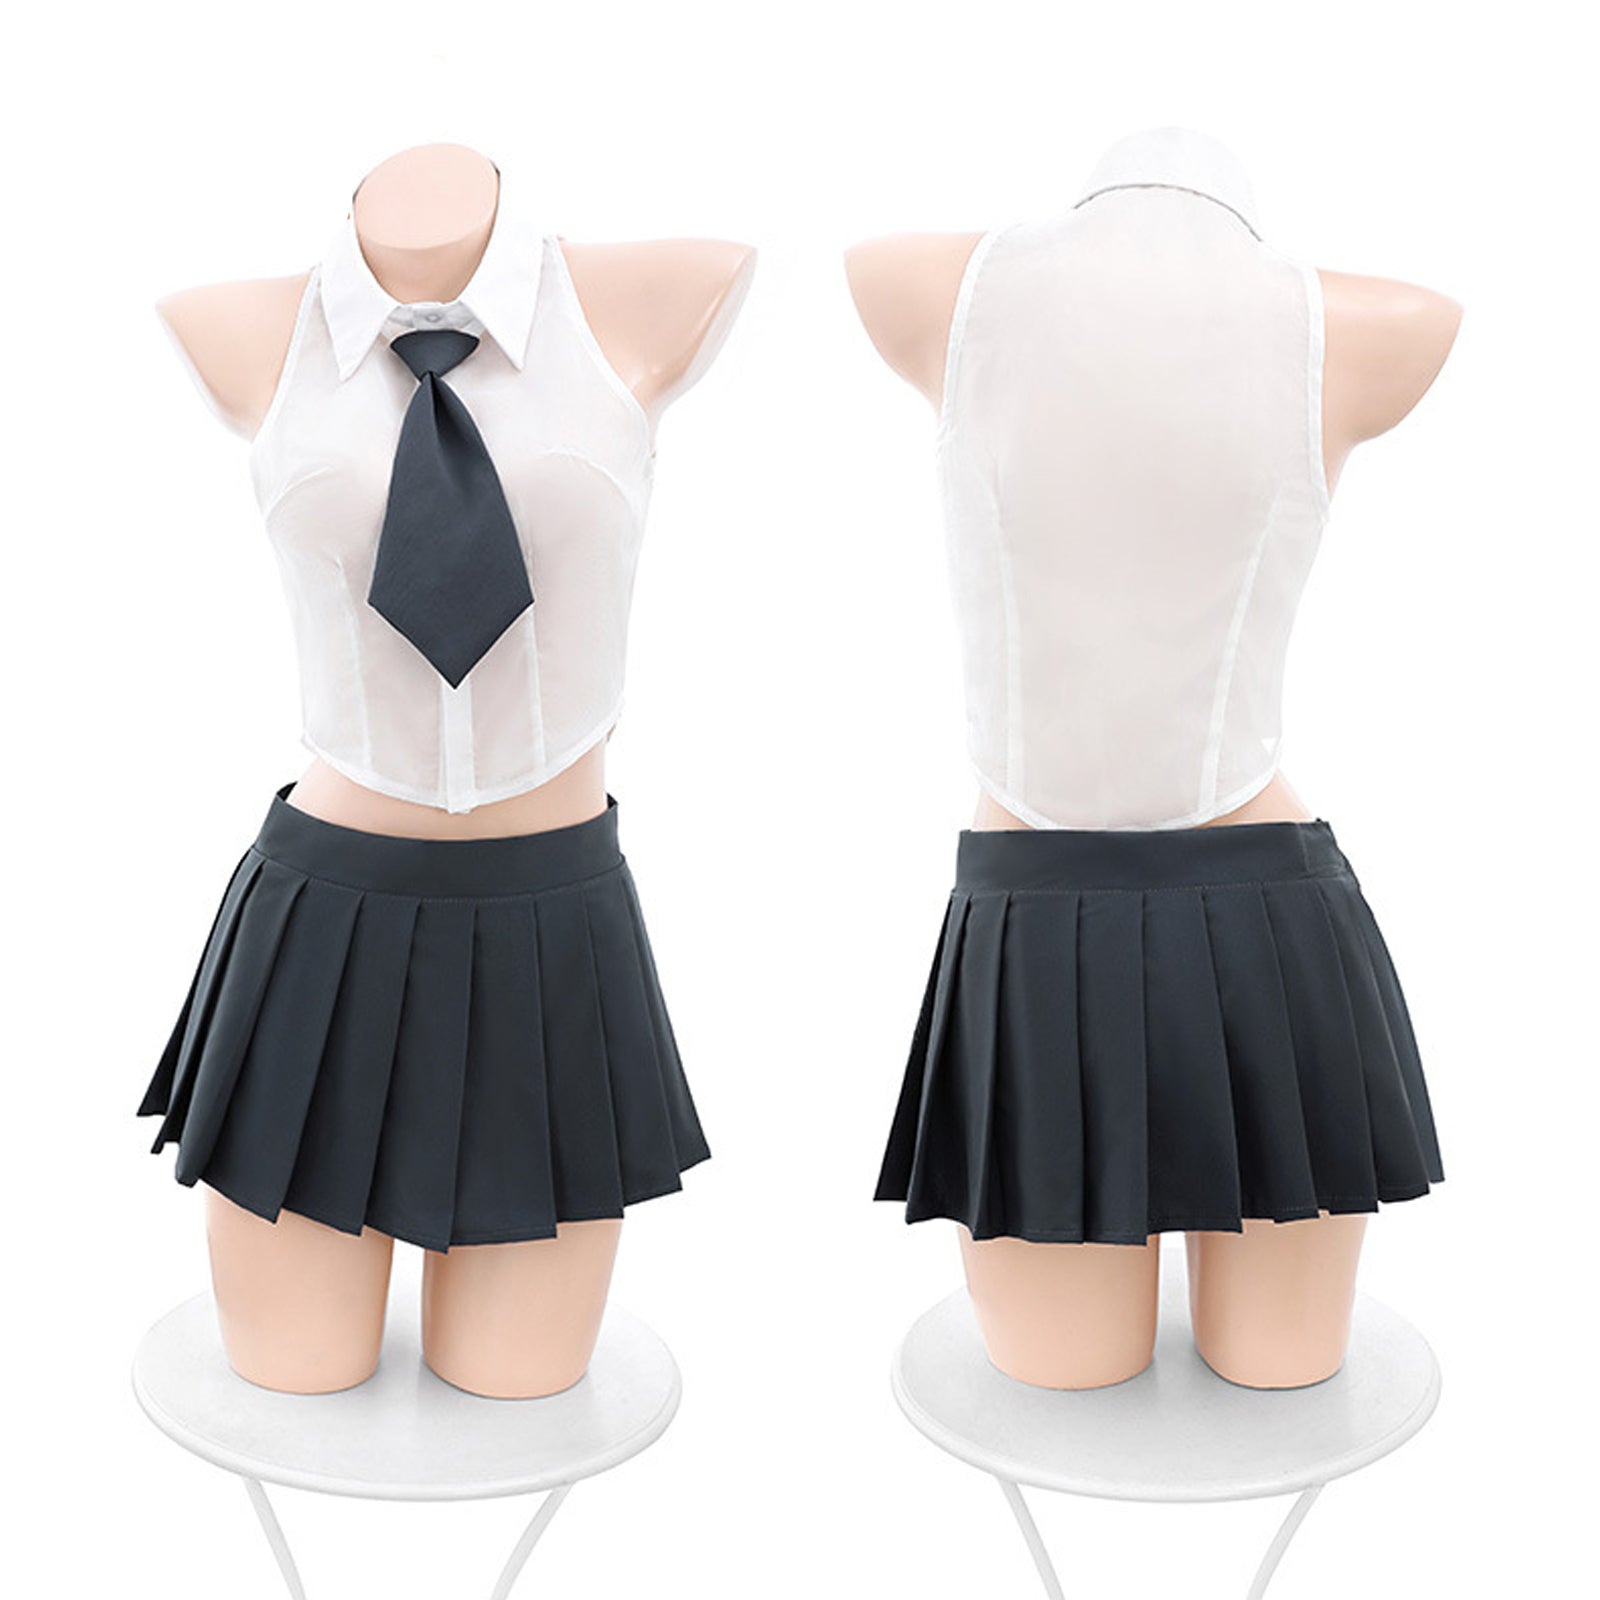 Anime Skirt - Shop for Anime Skirt on Wheretoget